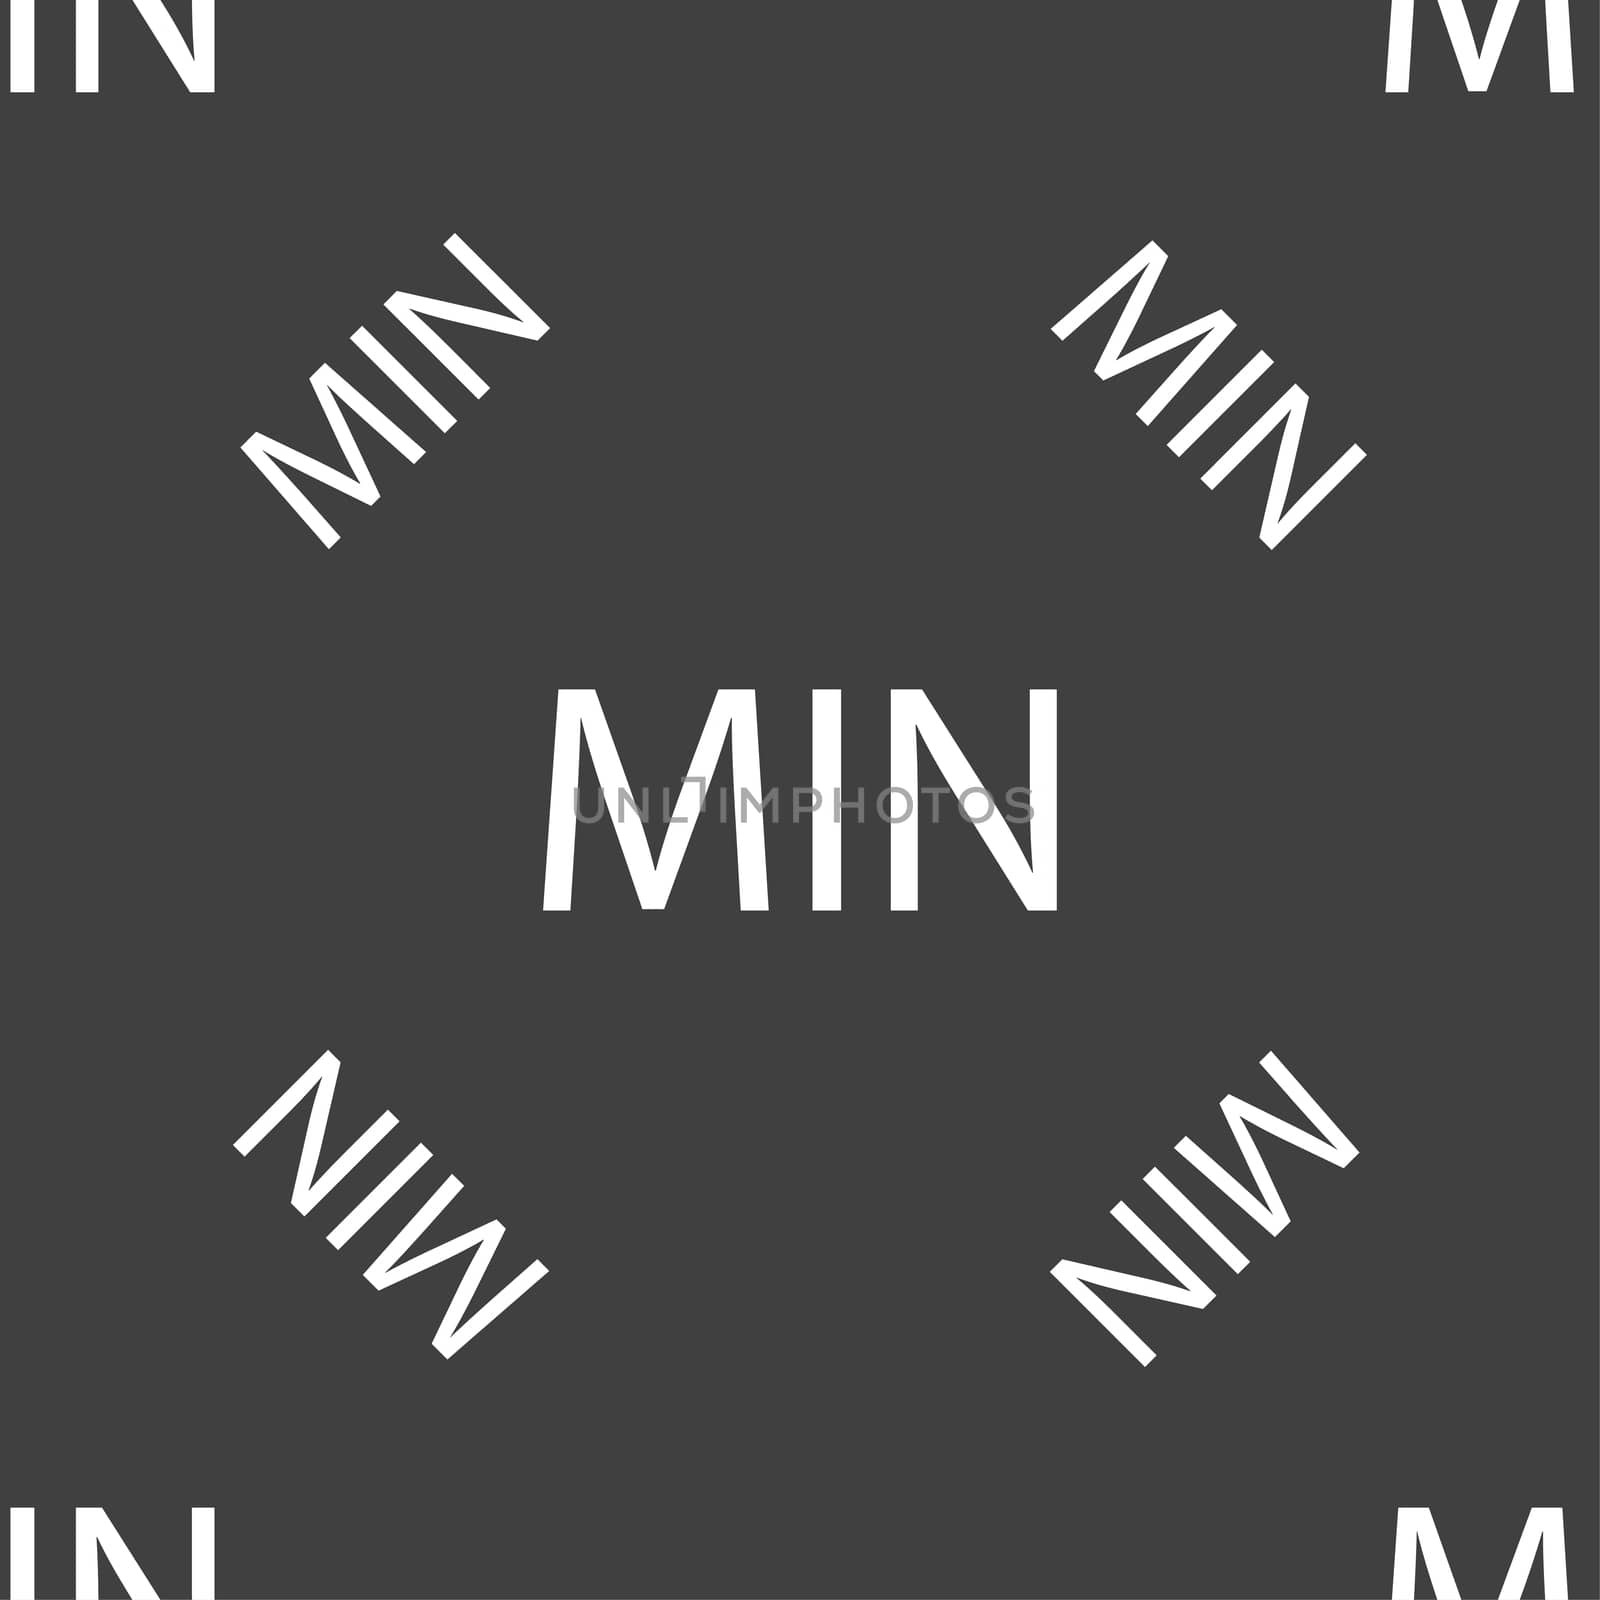 minimum sign icon. Seamless pattern on a gray background. illustration